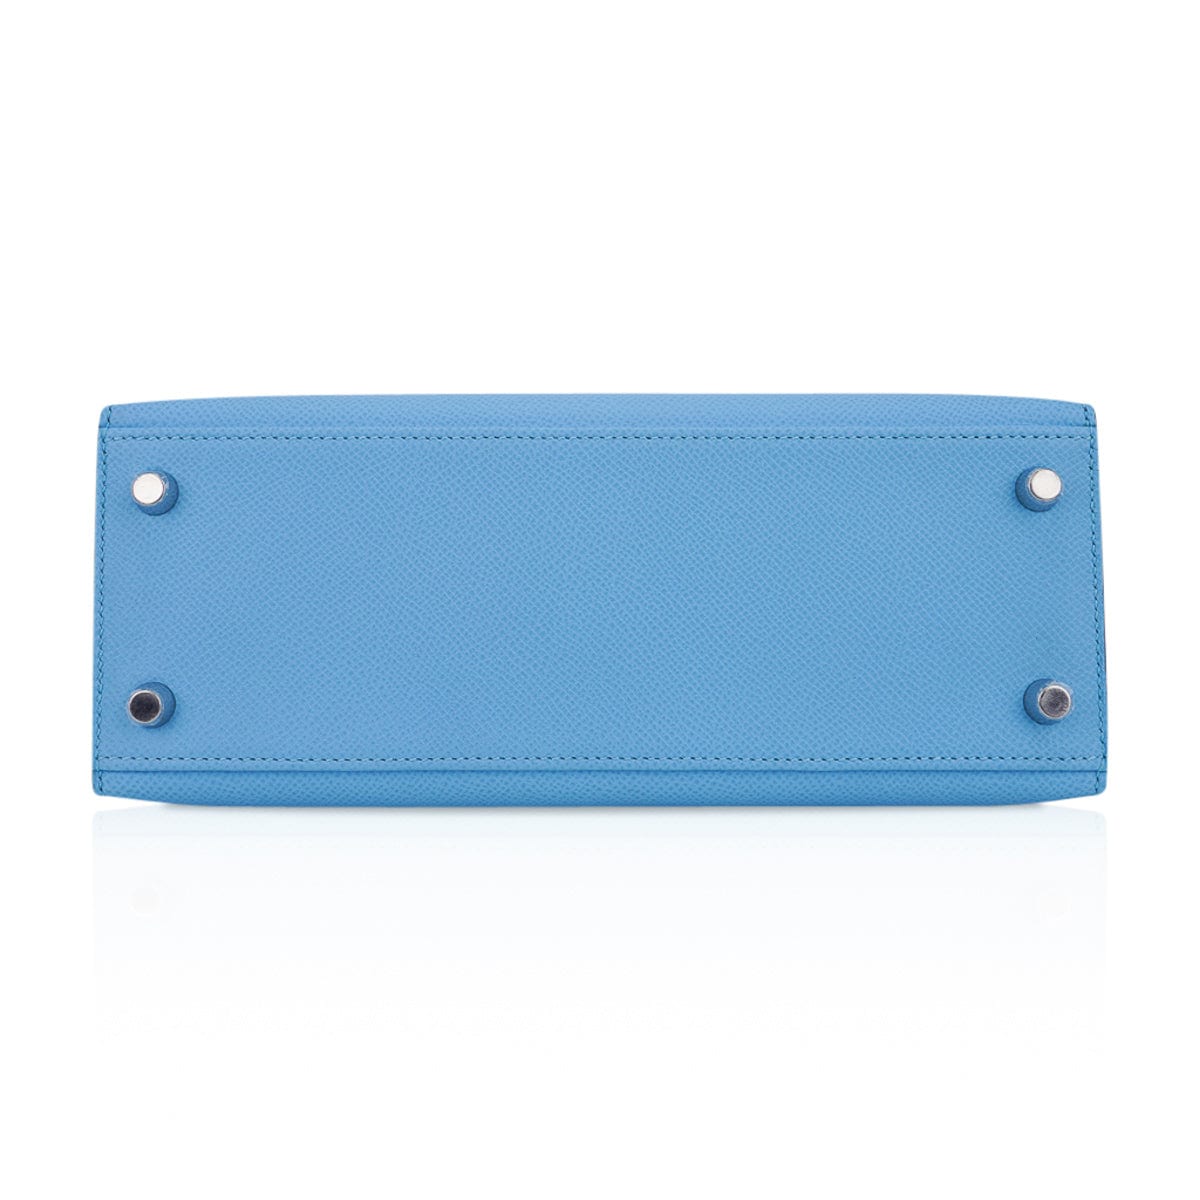 Hermes Kelly Sellier 25 Bag Blue Celeste Palladium Epsom Leather –  Mightychic